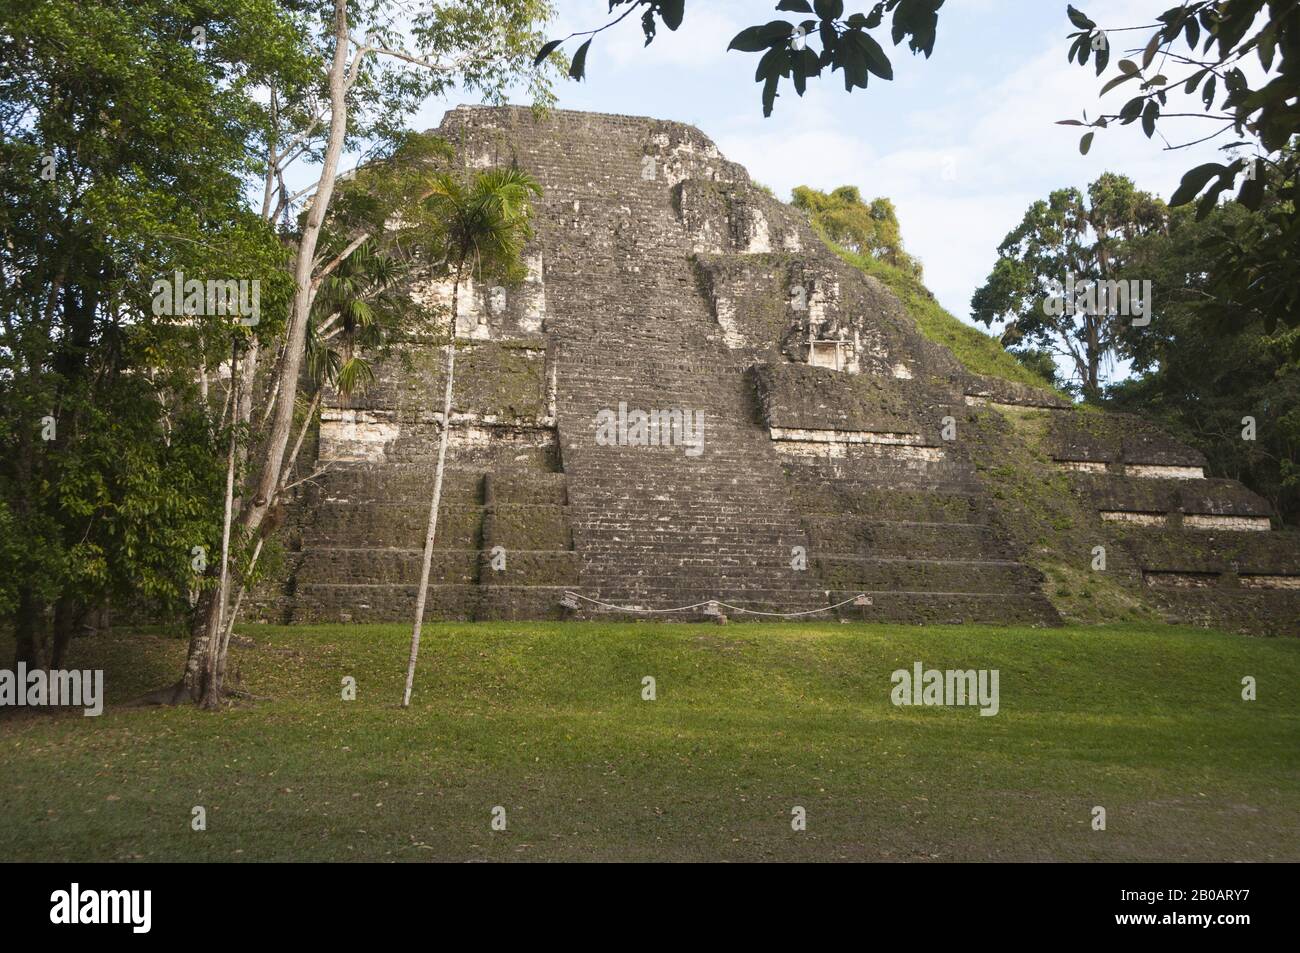 Guatemala, Tikal National Park, Mundo Perdido, Lost World Pyramid, 700 BC, oldest in Tikal, talud-tablero architecture; UNESCO World Heritage Site Stock Photo